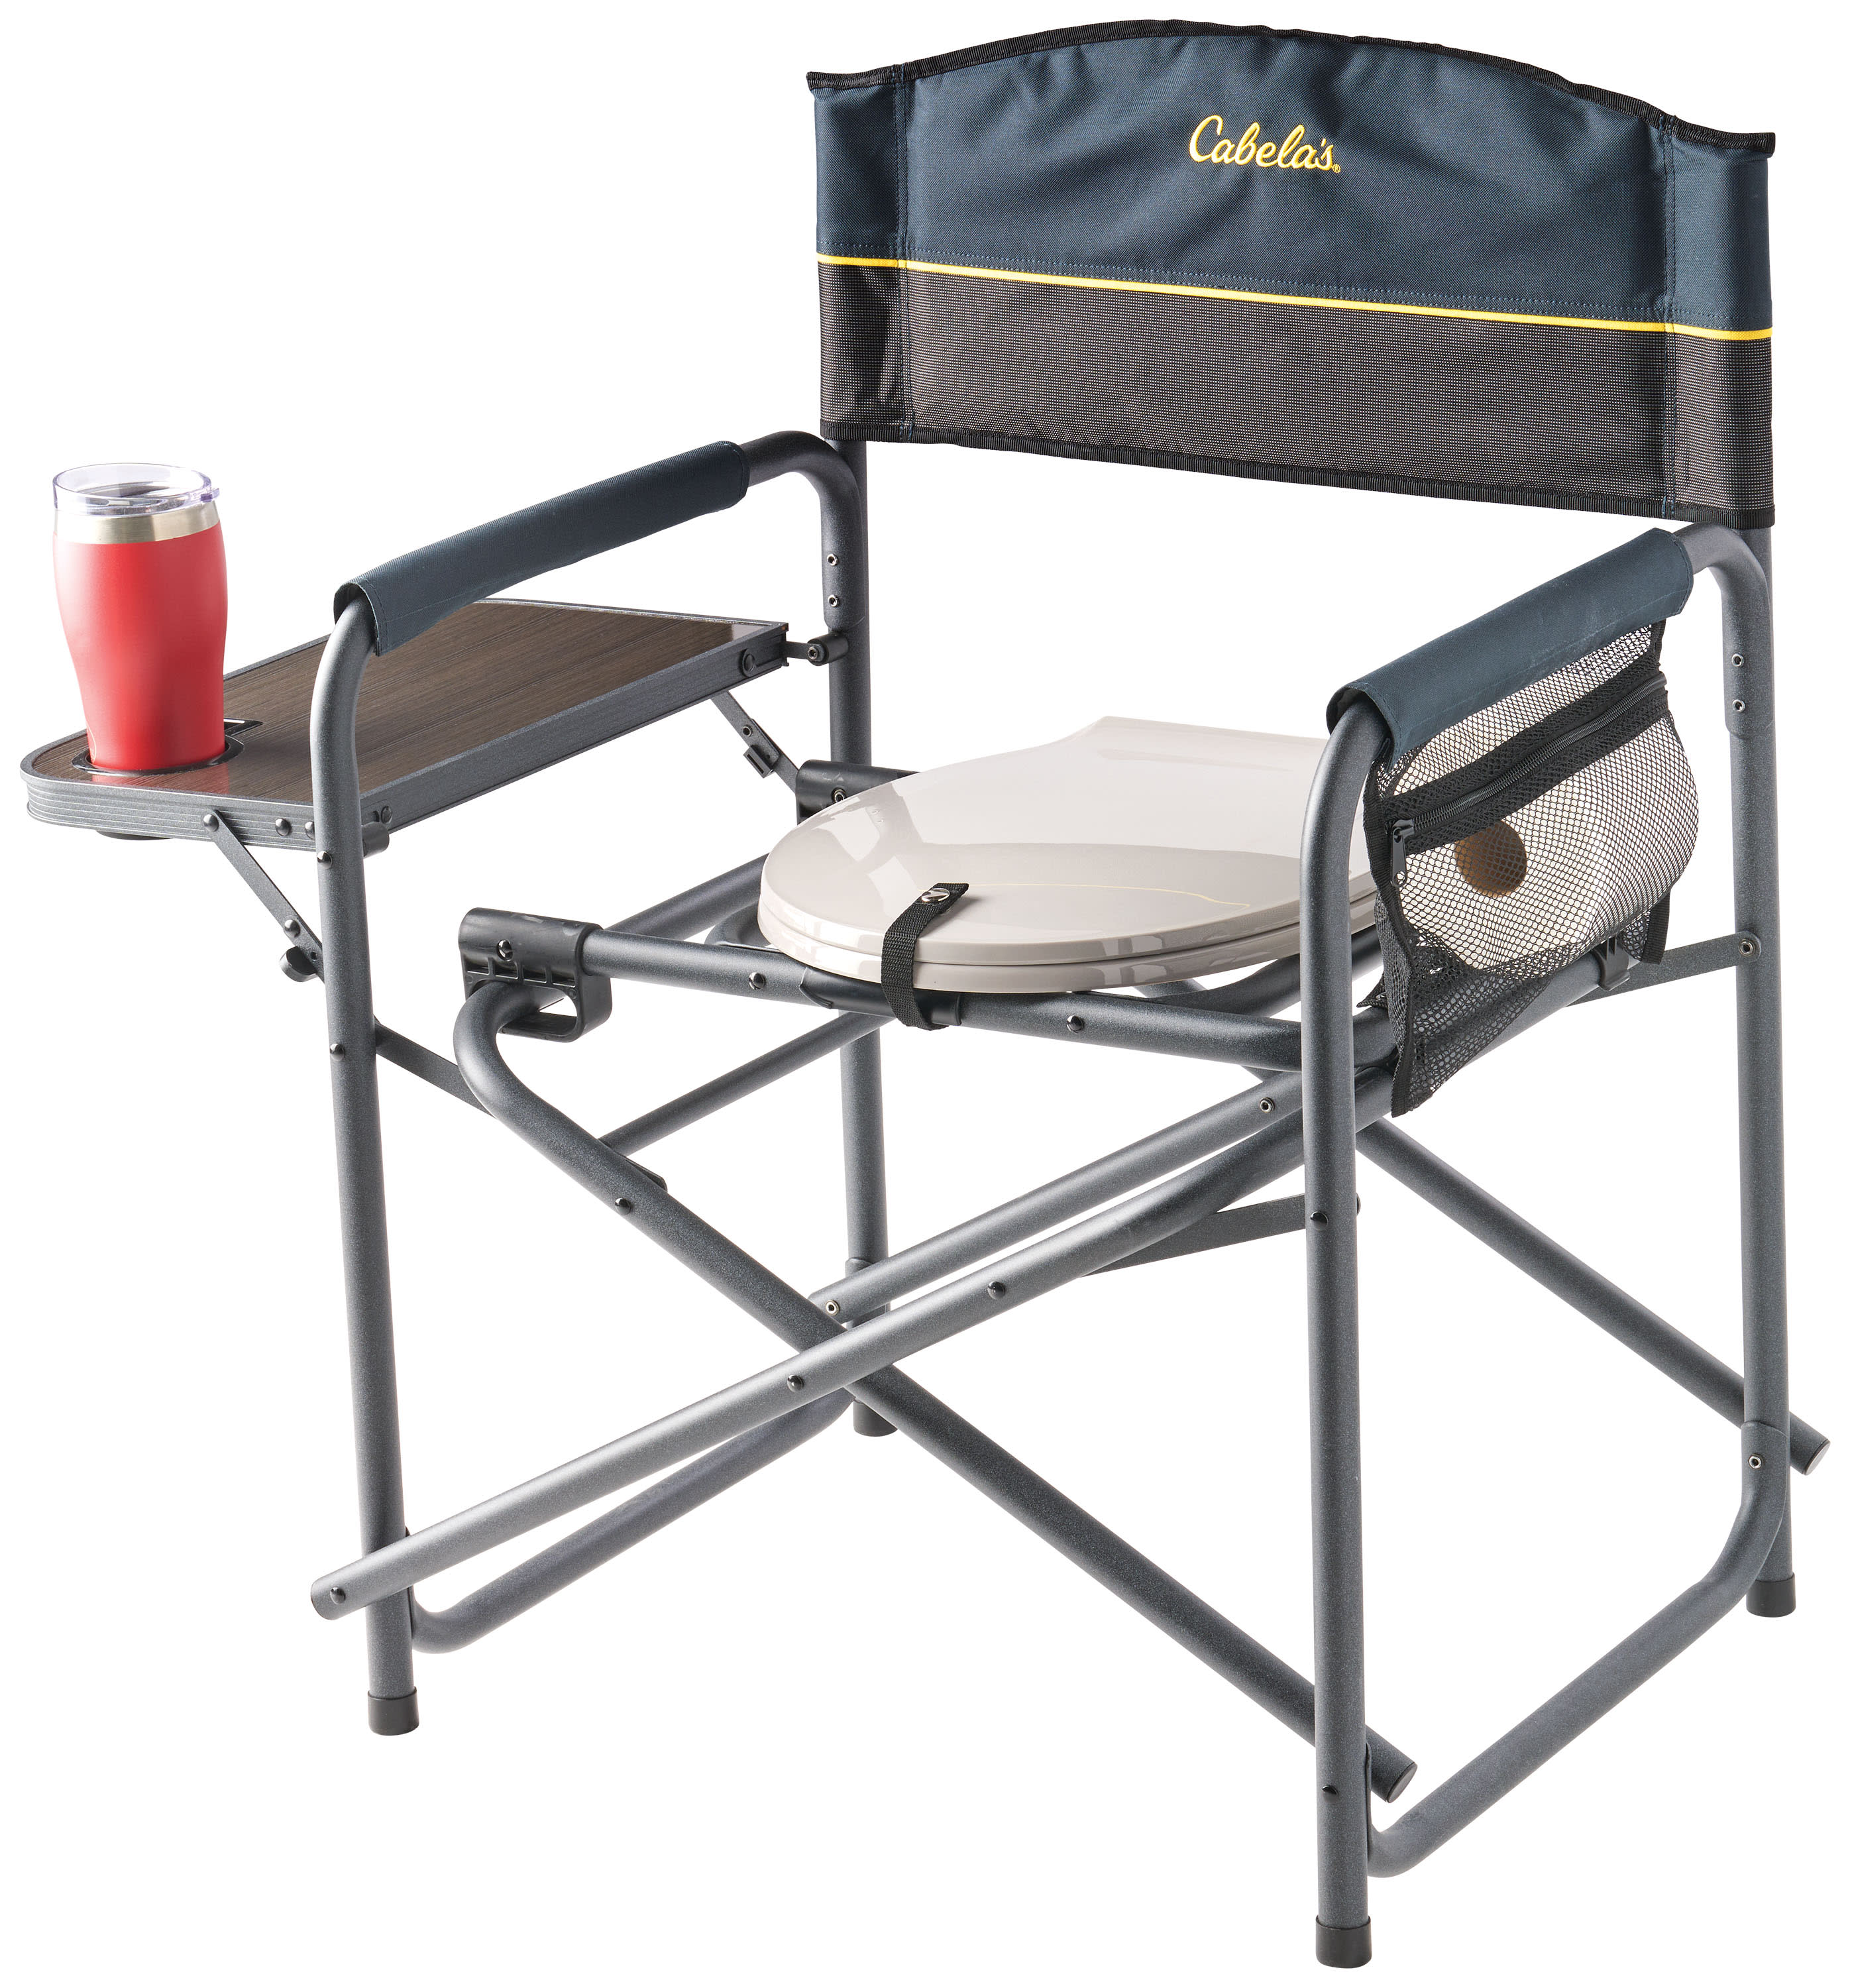 Cabela's® Big Outdoorsman Camp Commode Camping Toilet